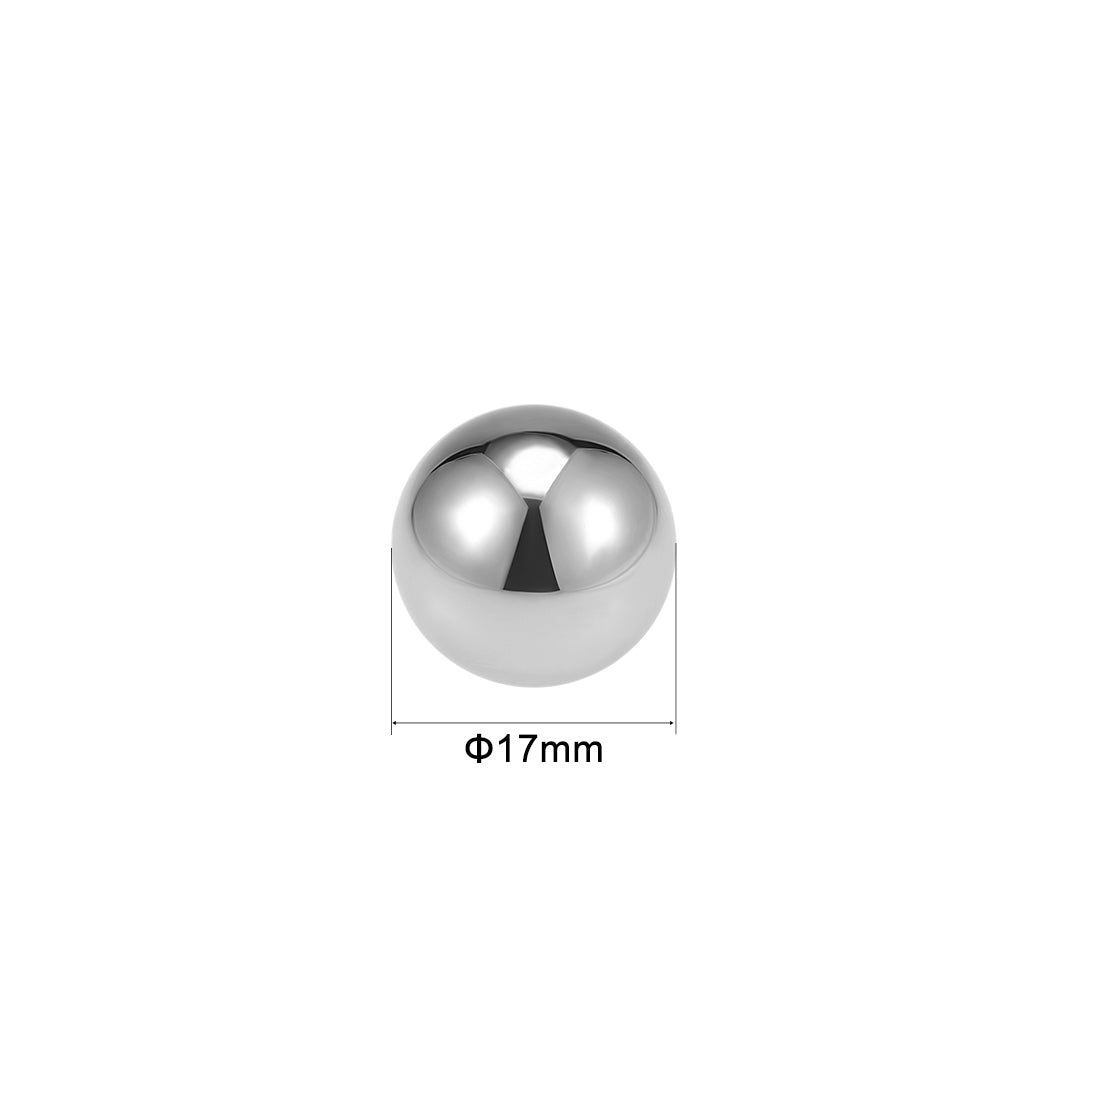 uxcell Uxcell 12mm Precision Chrome Steel Bearing Balls G25 10pcs